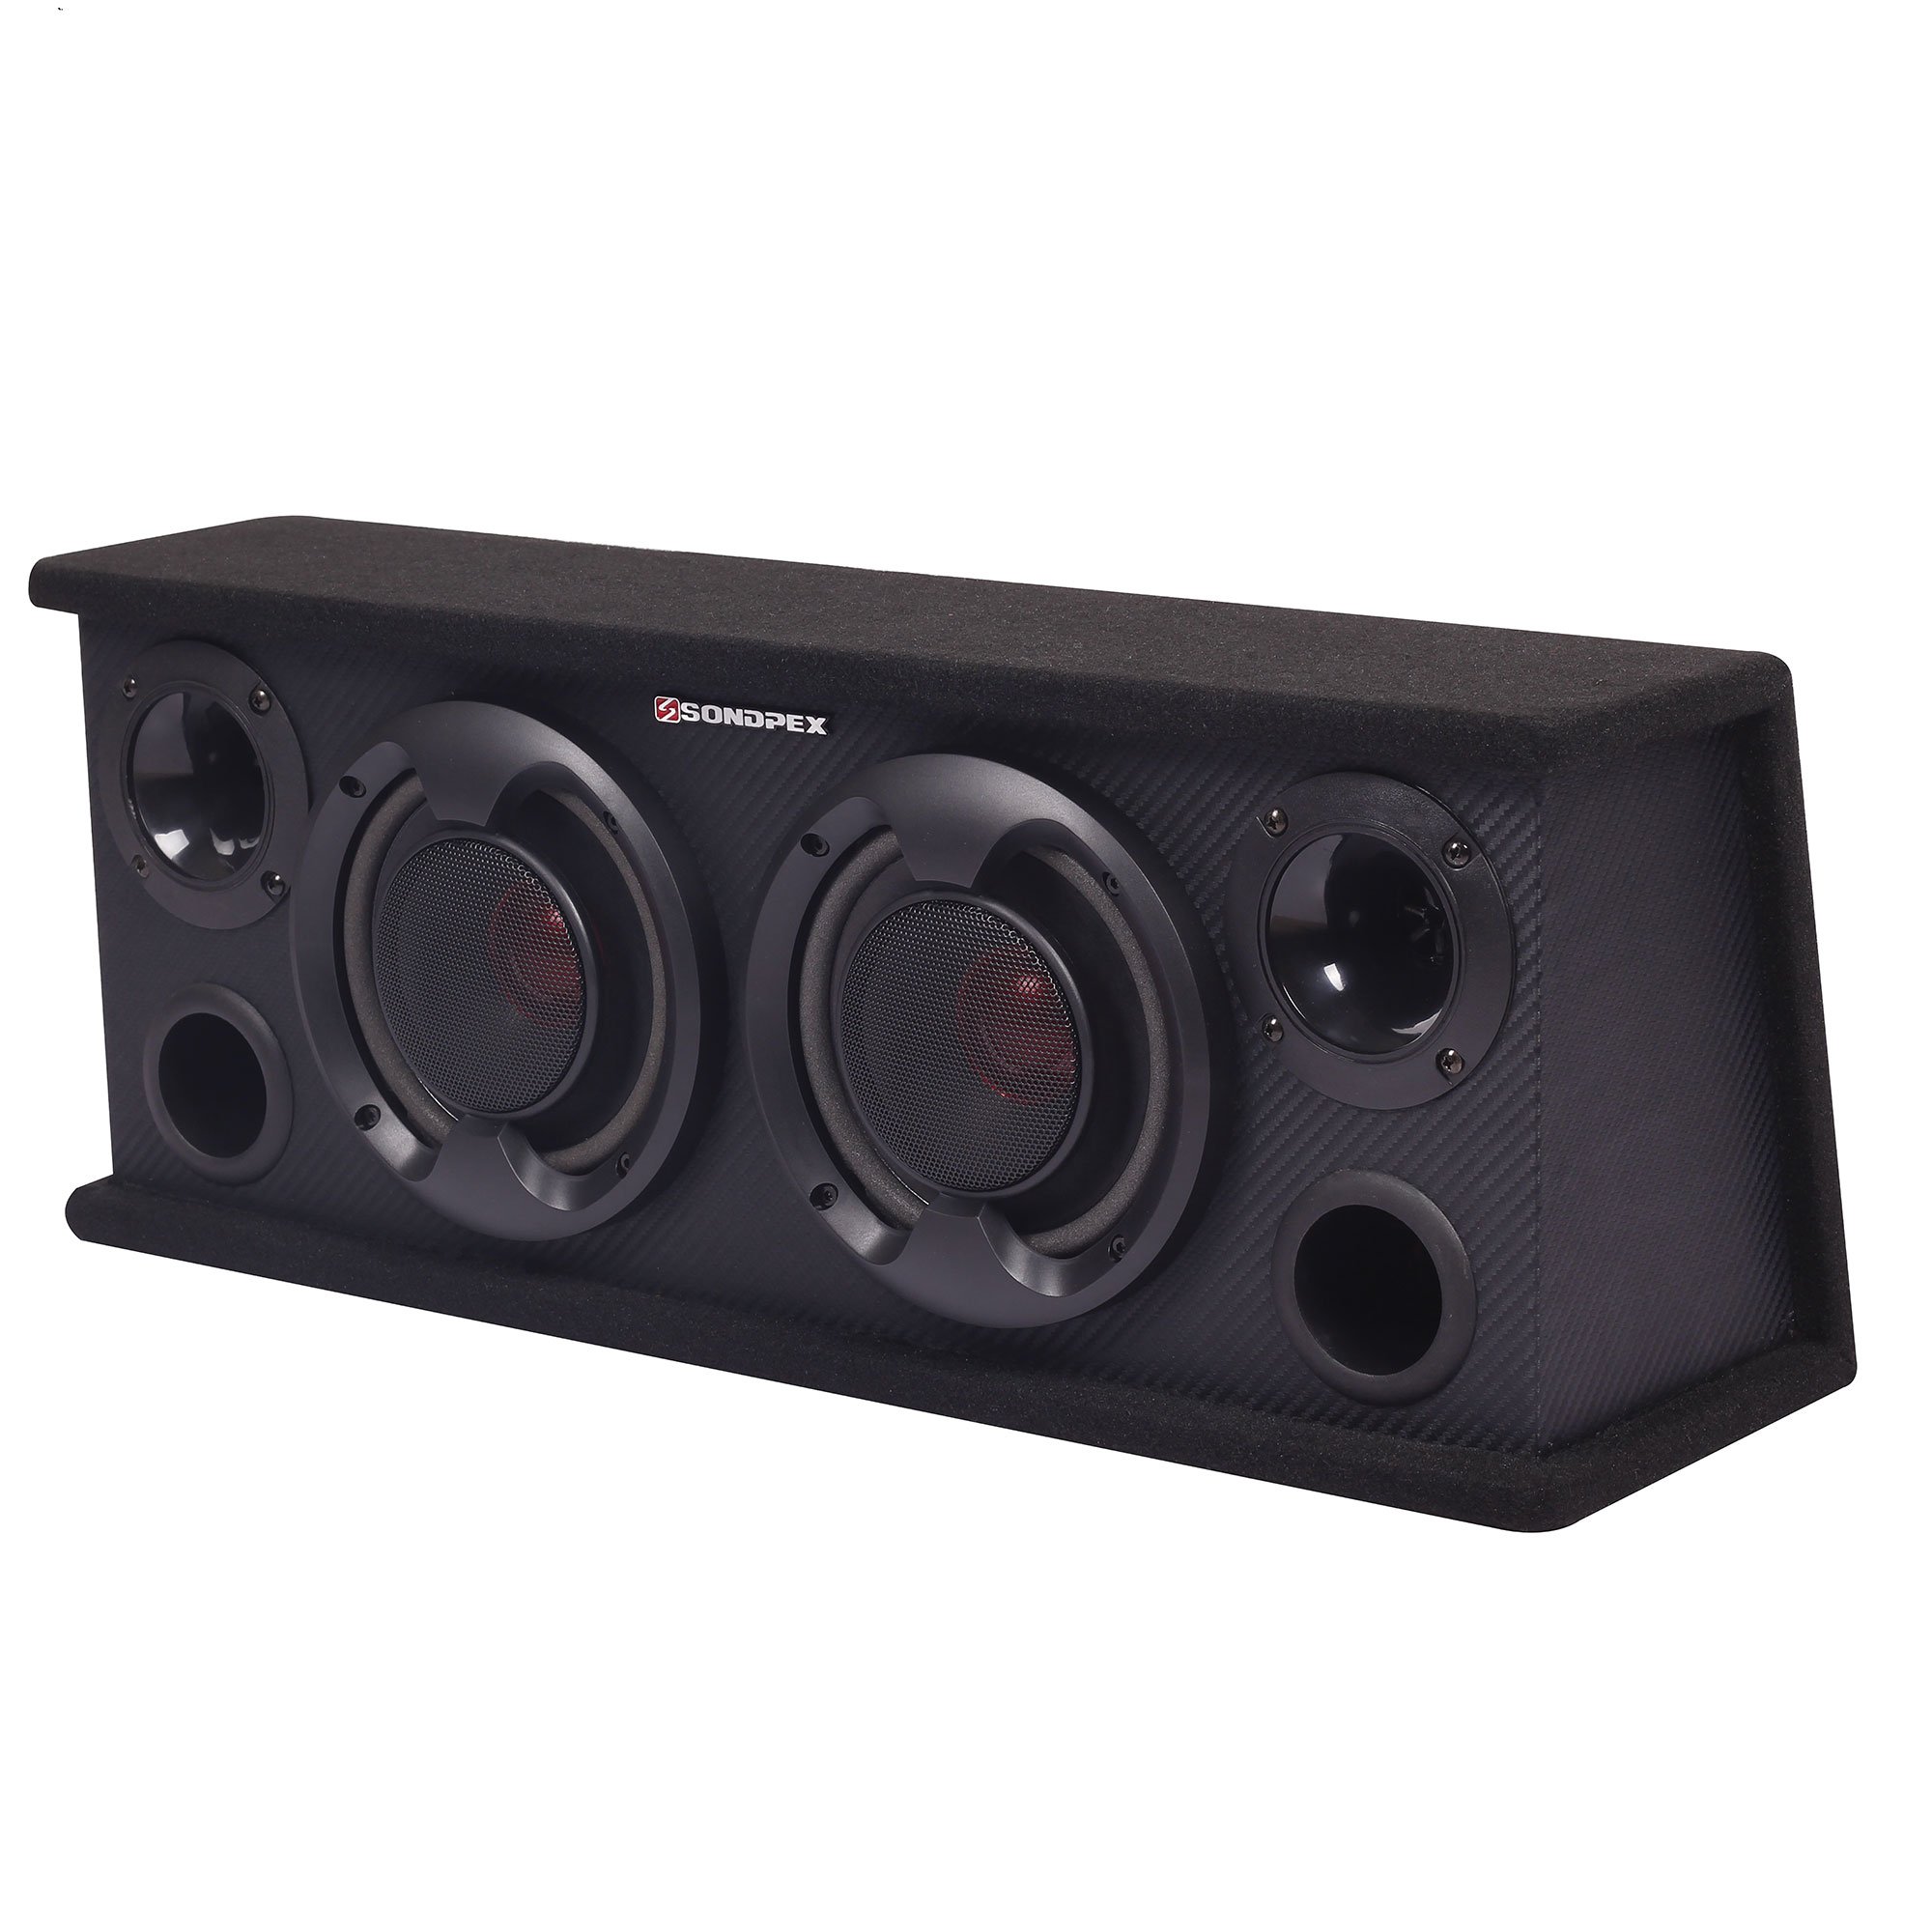 Sondpex 400W 6.5" 2-Way Speaker System BB14065 